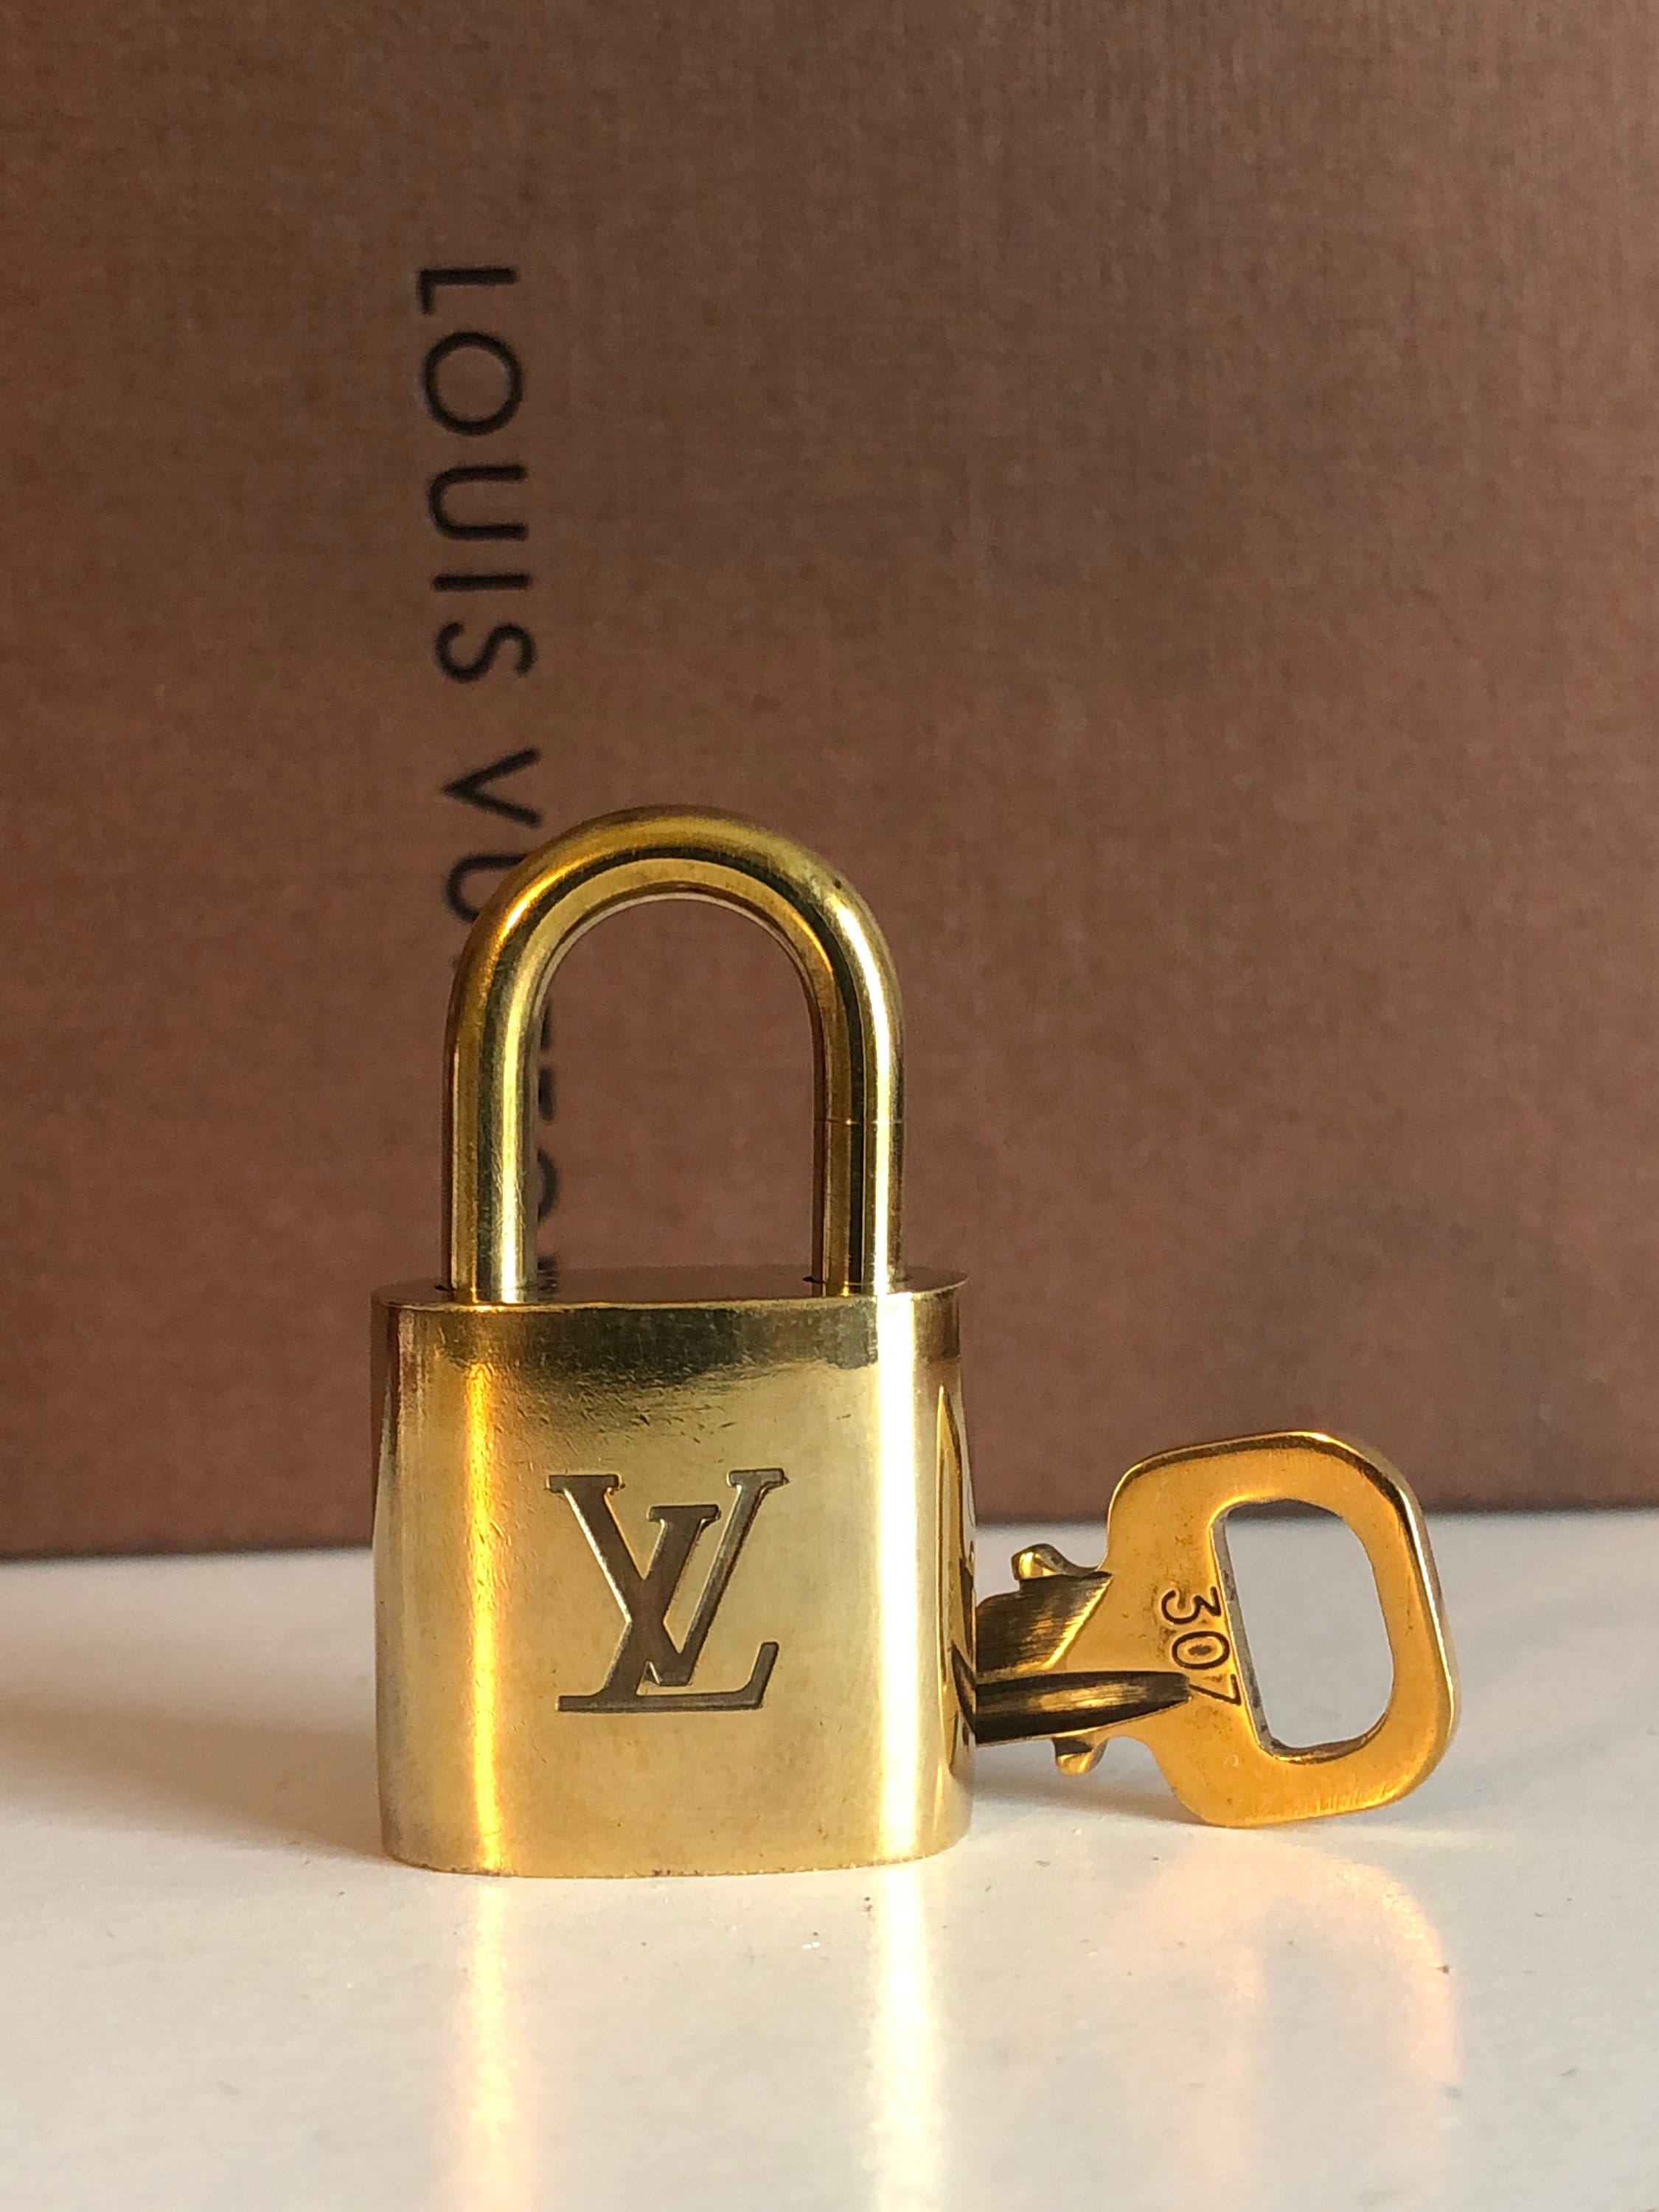 lv padlock and key